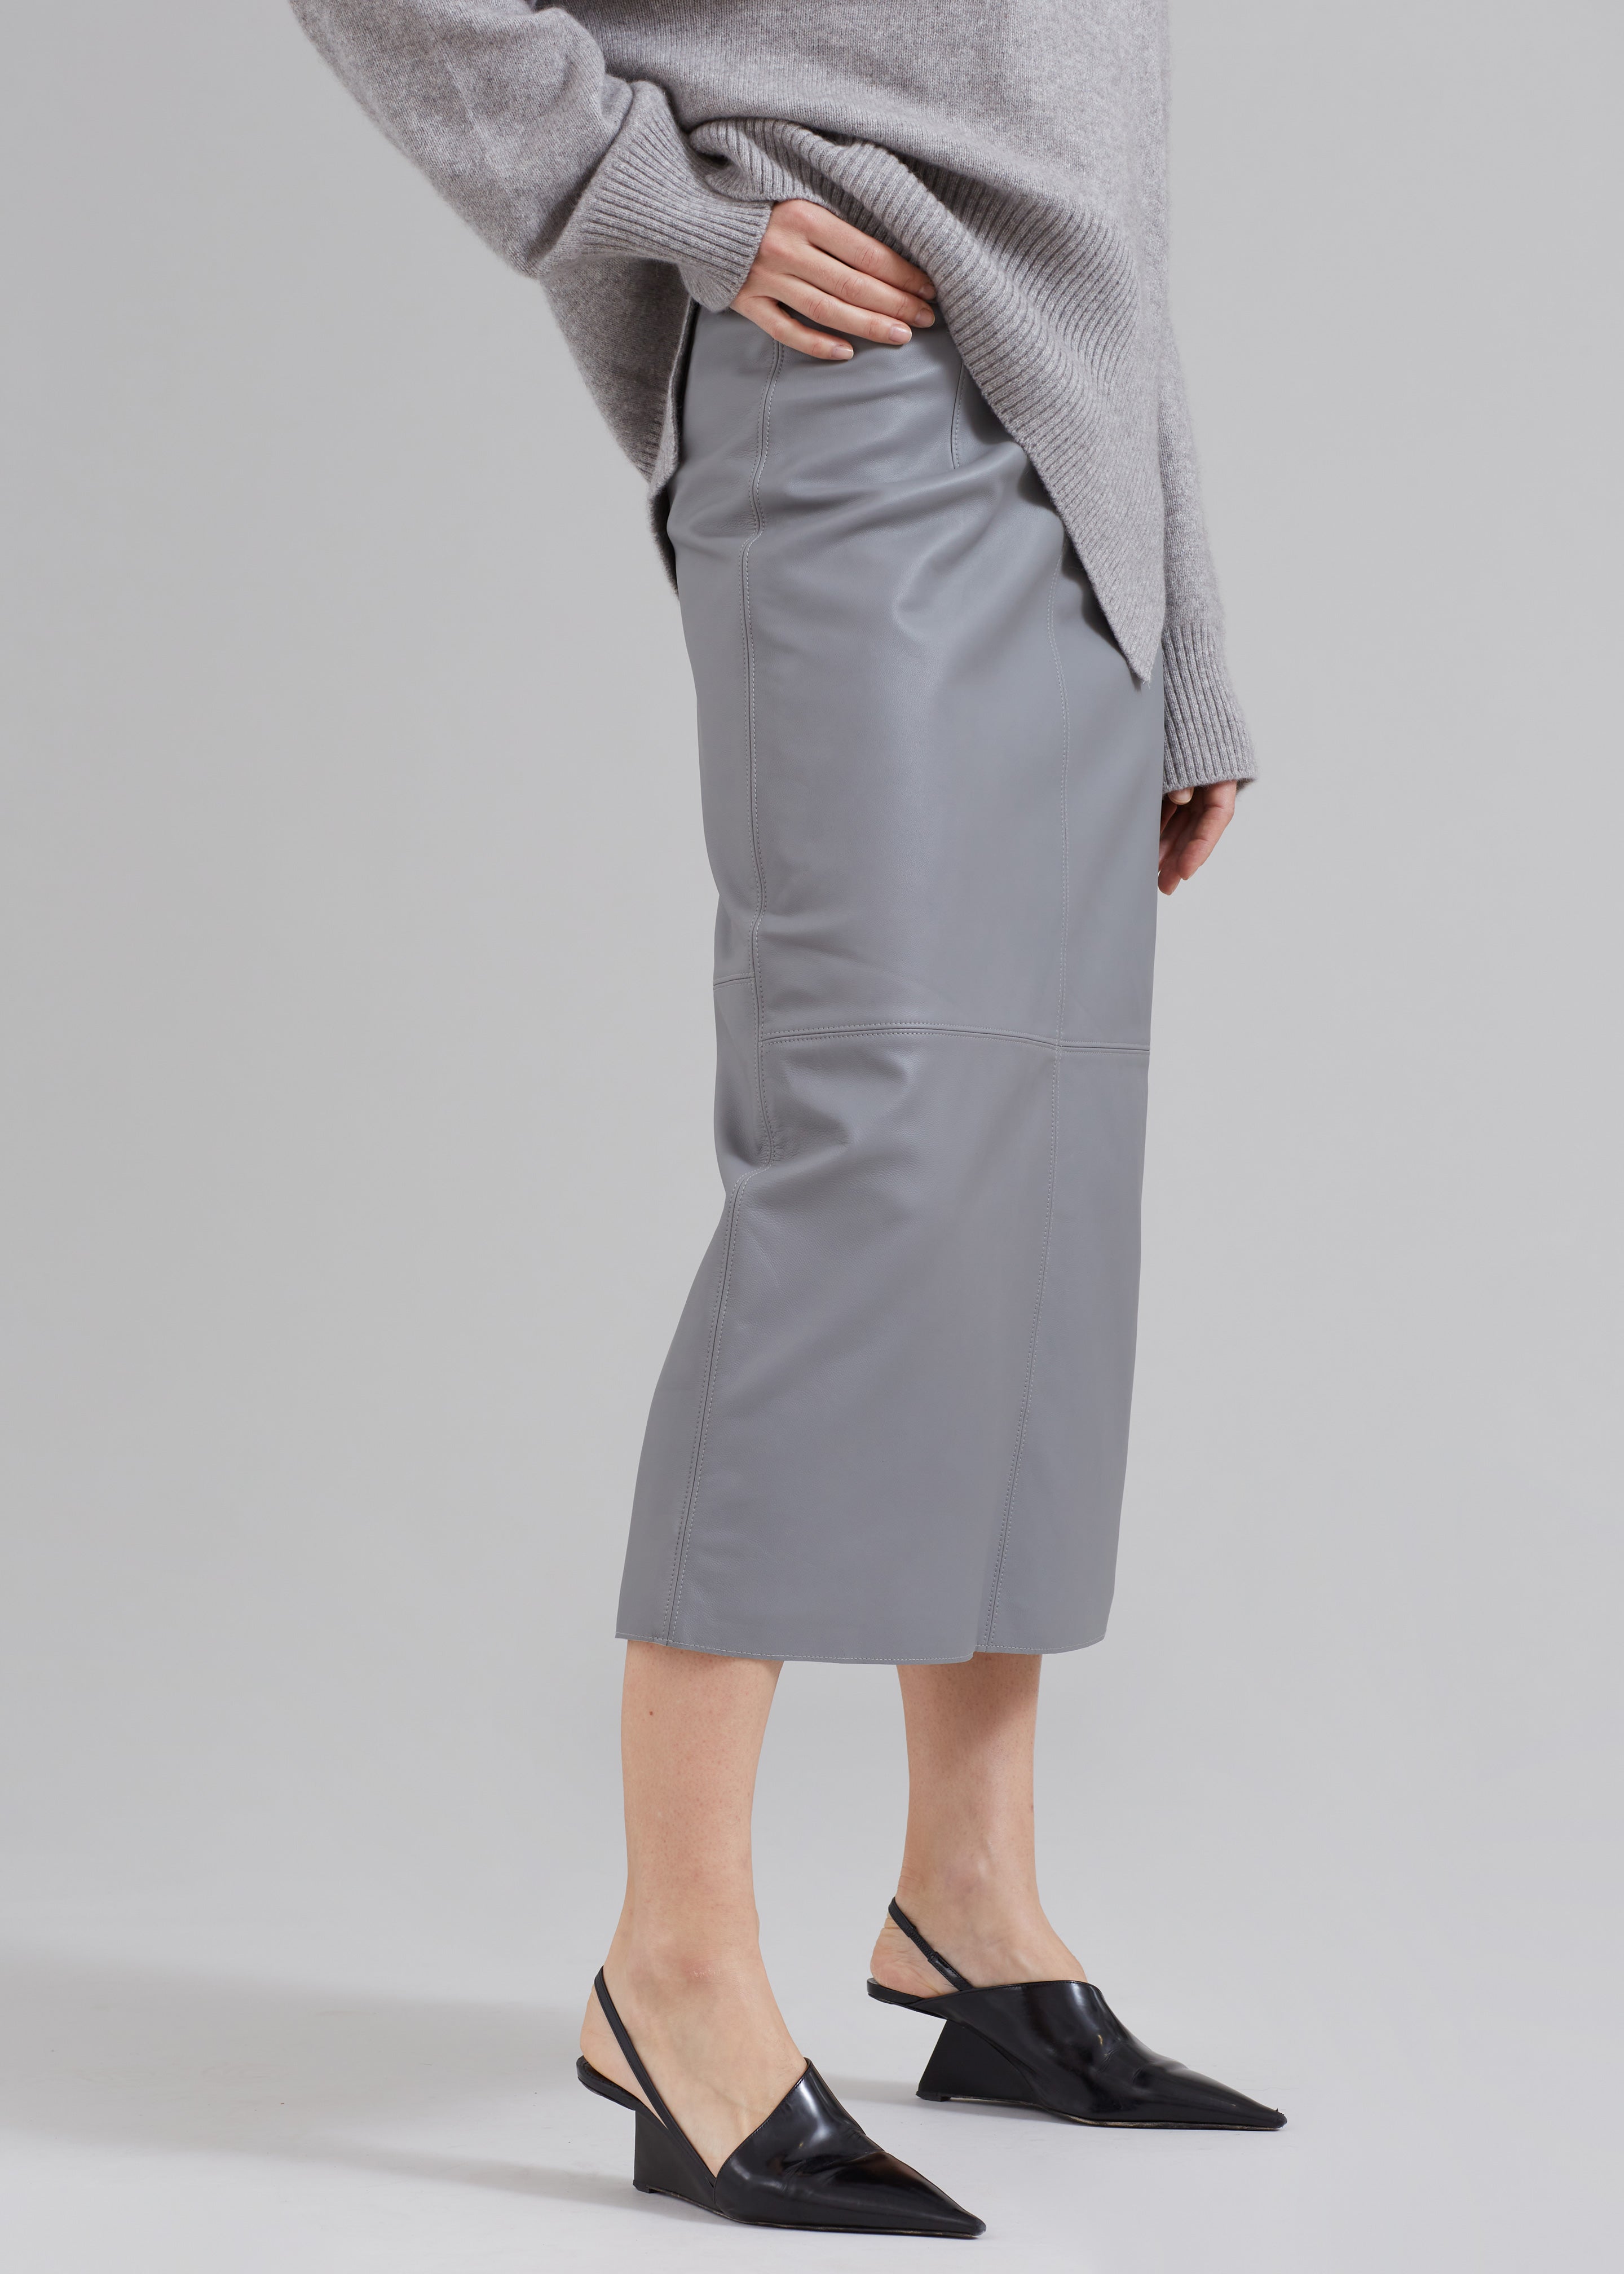 Heather Leather Pencil Skirt - Grey - 1